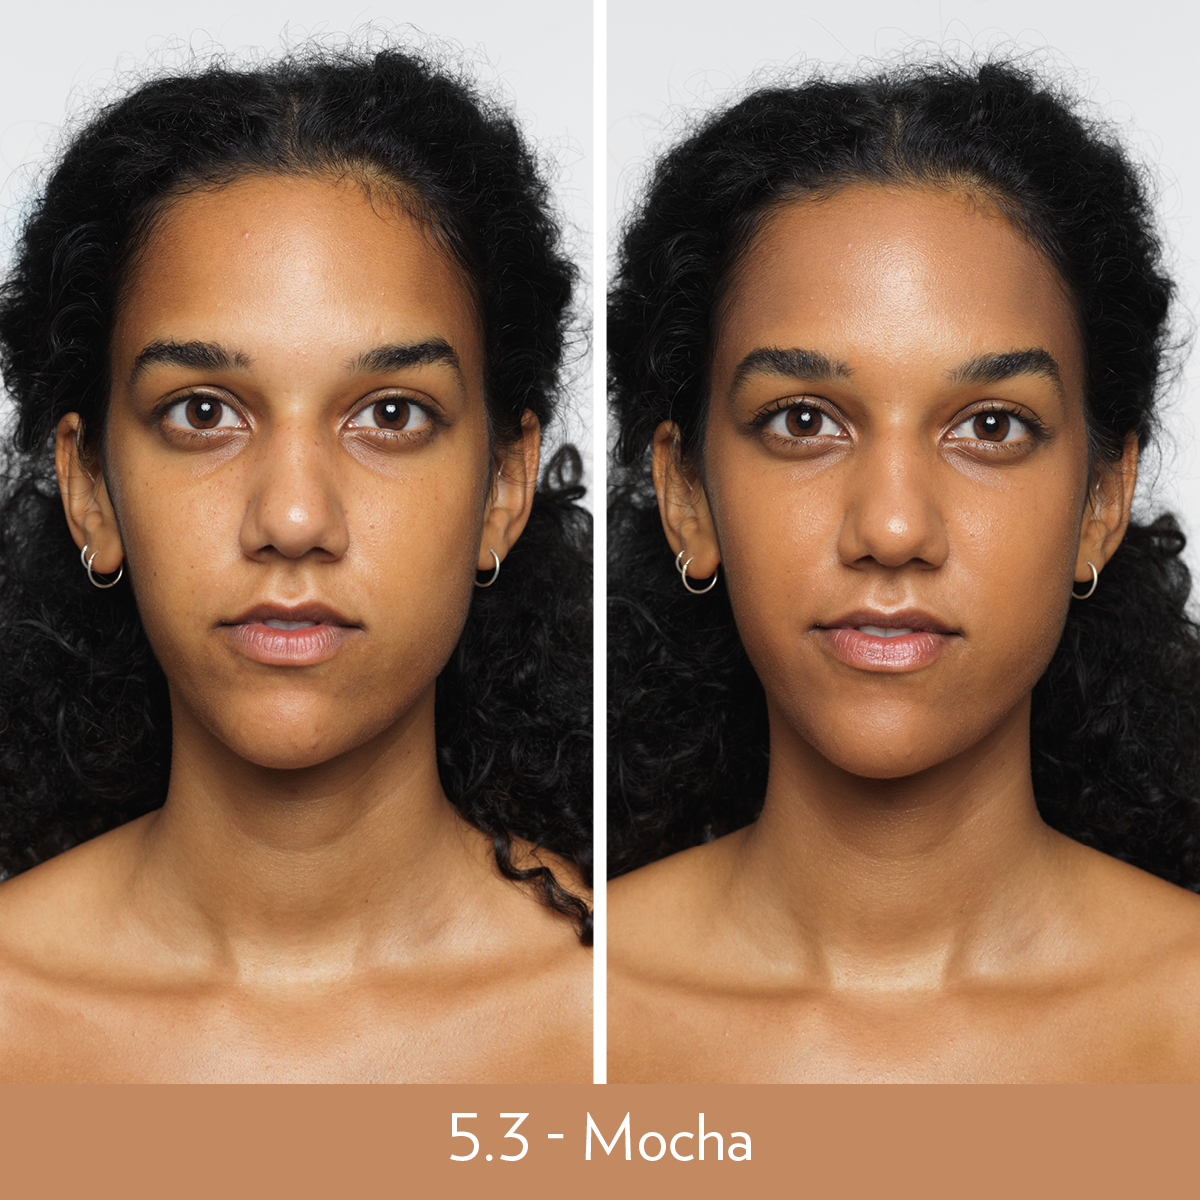 Nu Skin BB+ Skin Loving Foundation 5.3 Mocha Before and After